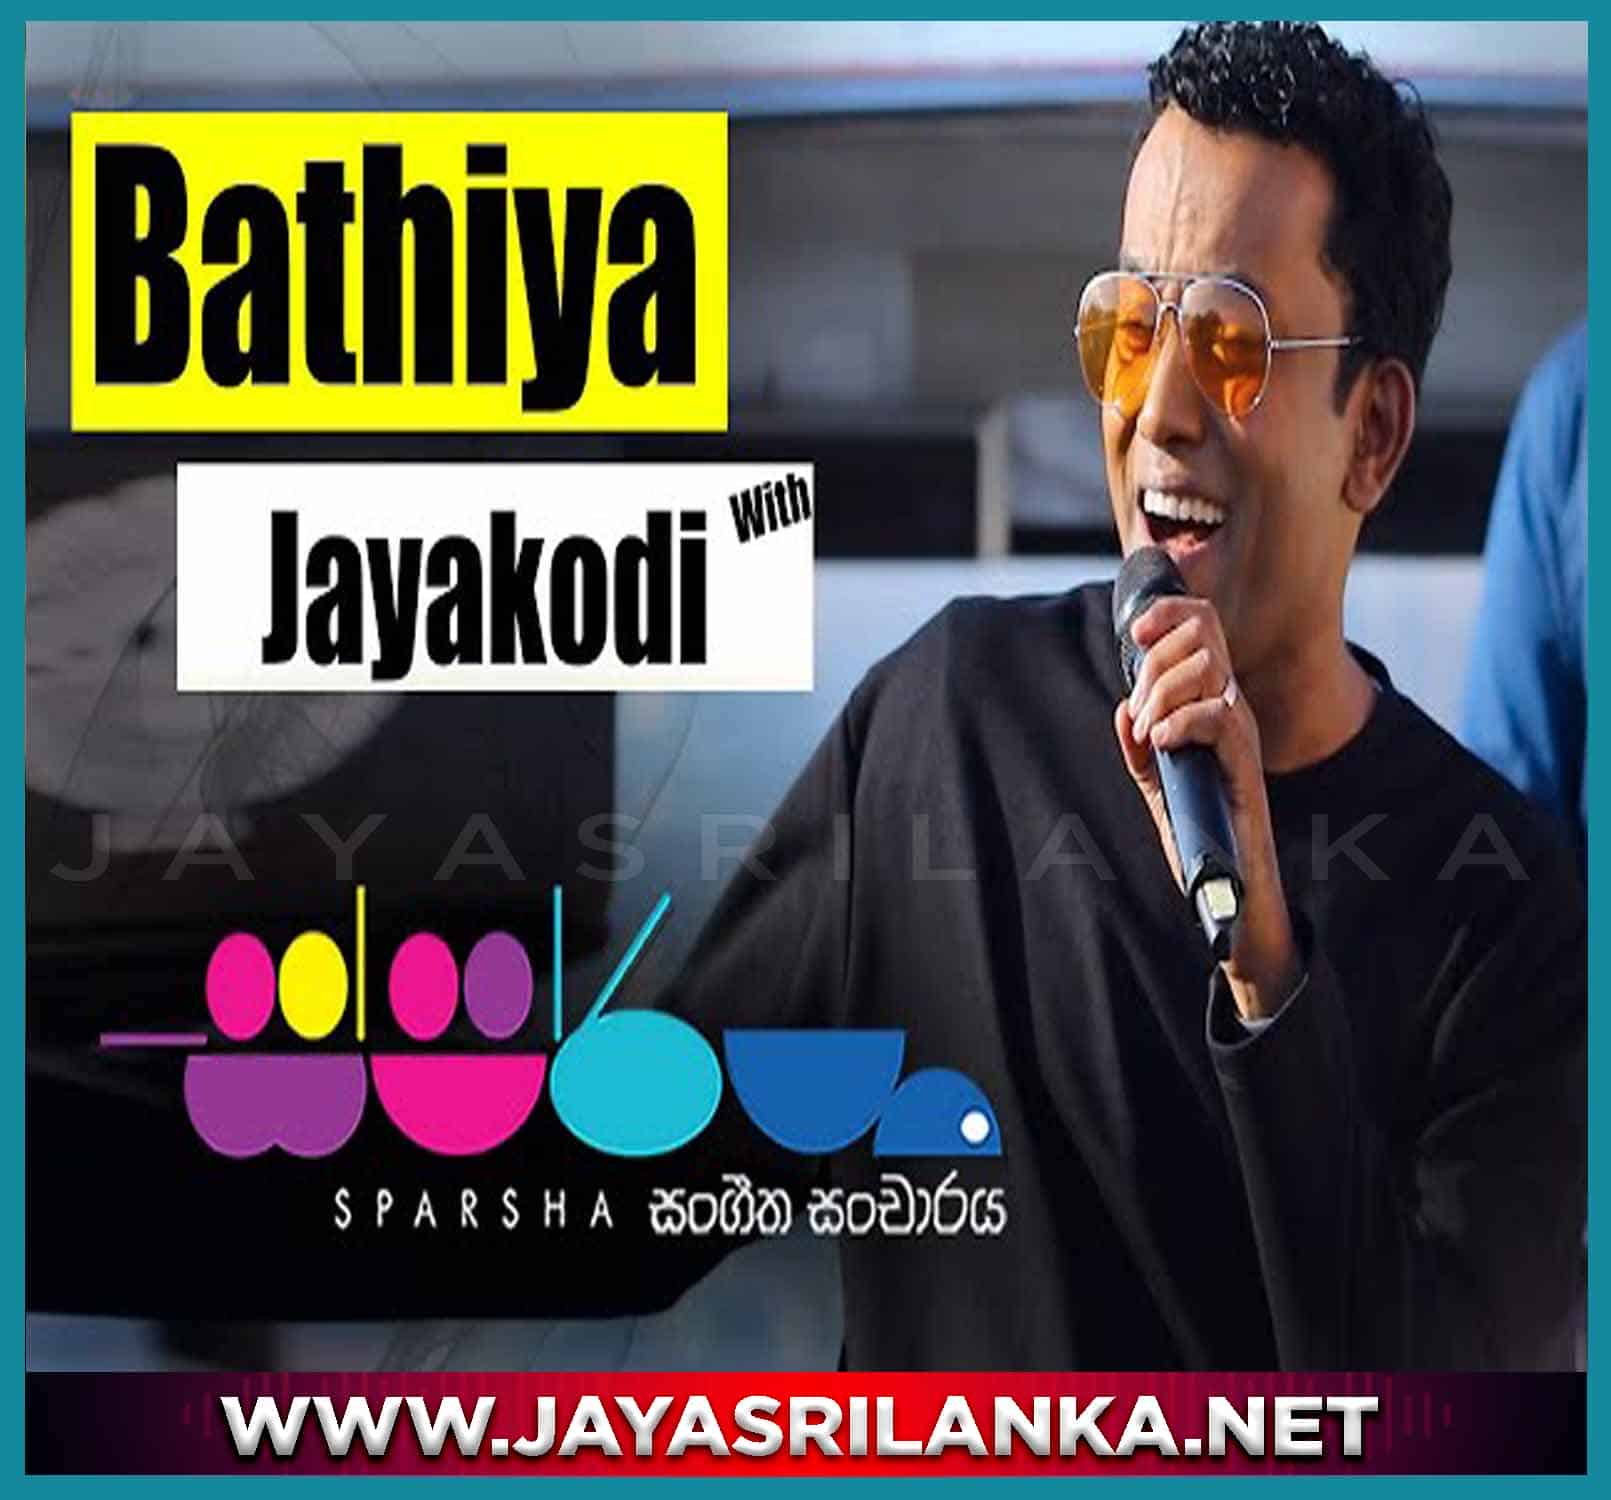 04 - Adaren Hitha Senehe (Sparsha) - Bathiya Jayakody mp3 Image